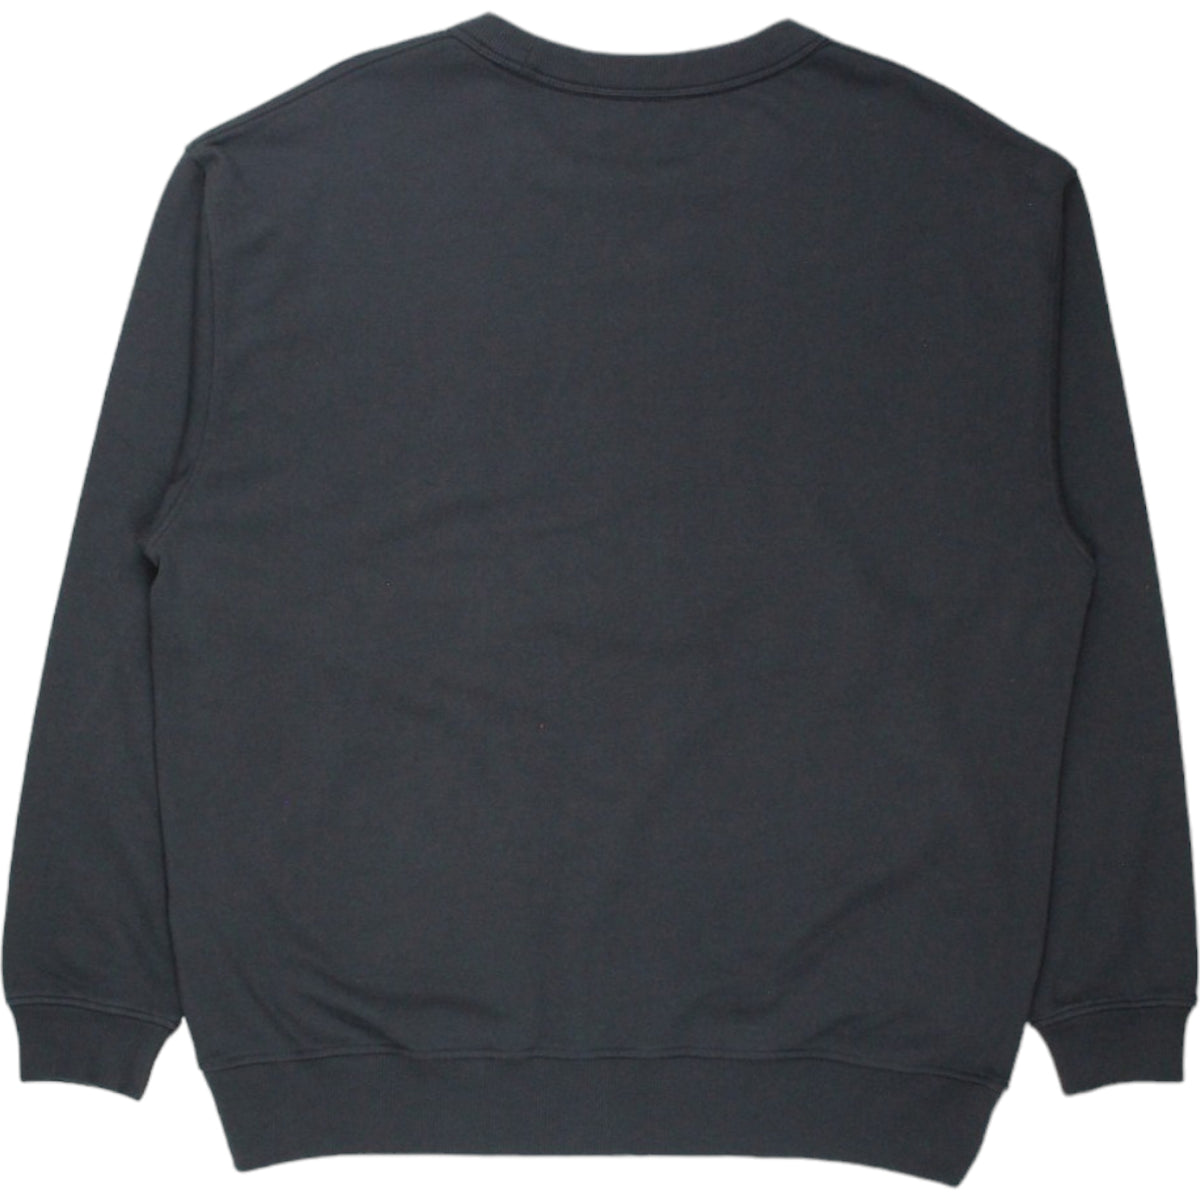 YMC Charcoal Applique Sweatshirt